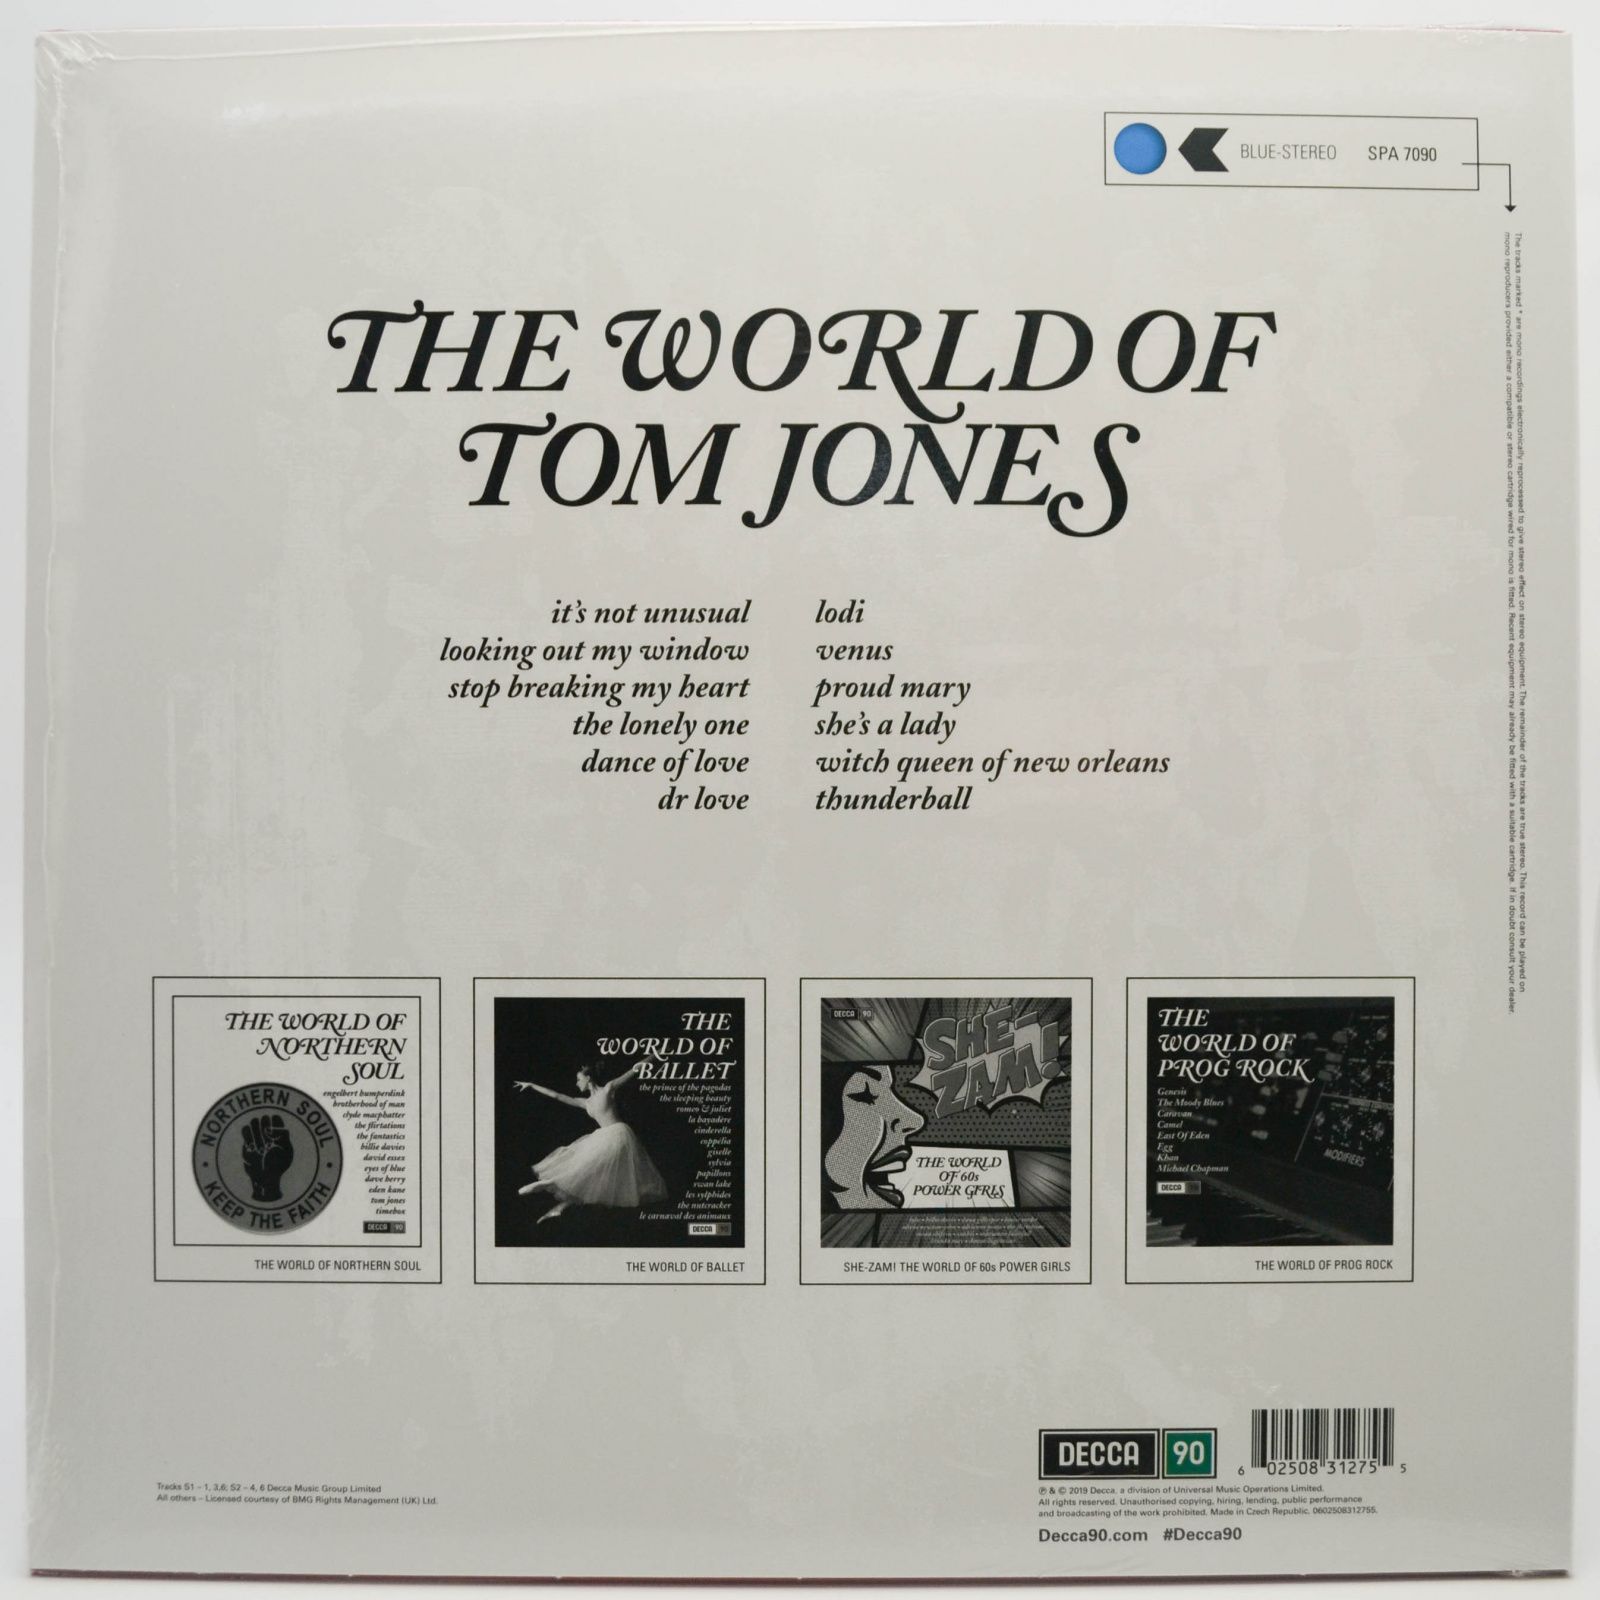 Tom Jones — The World Of Tom Jones, 1975